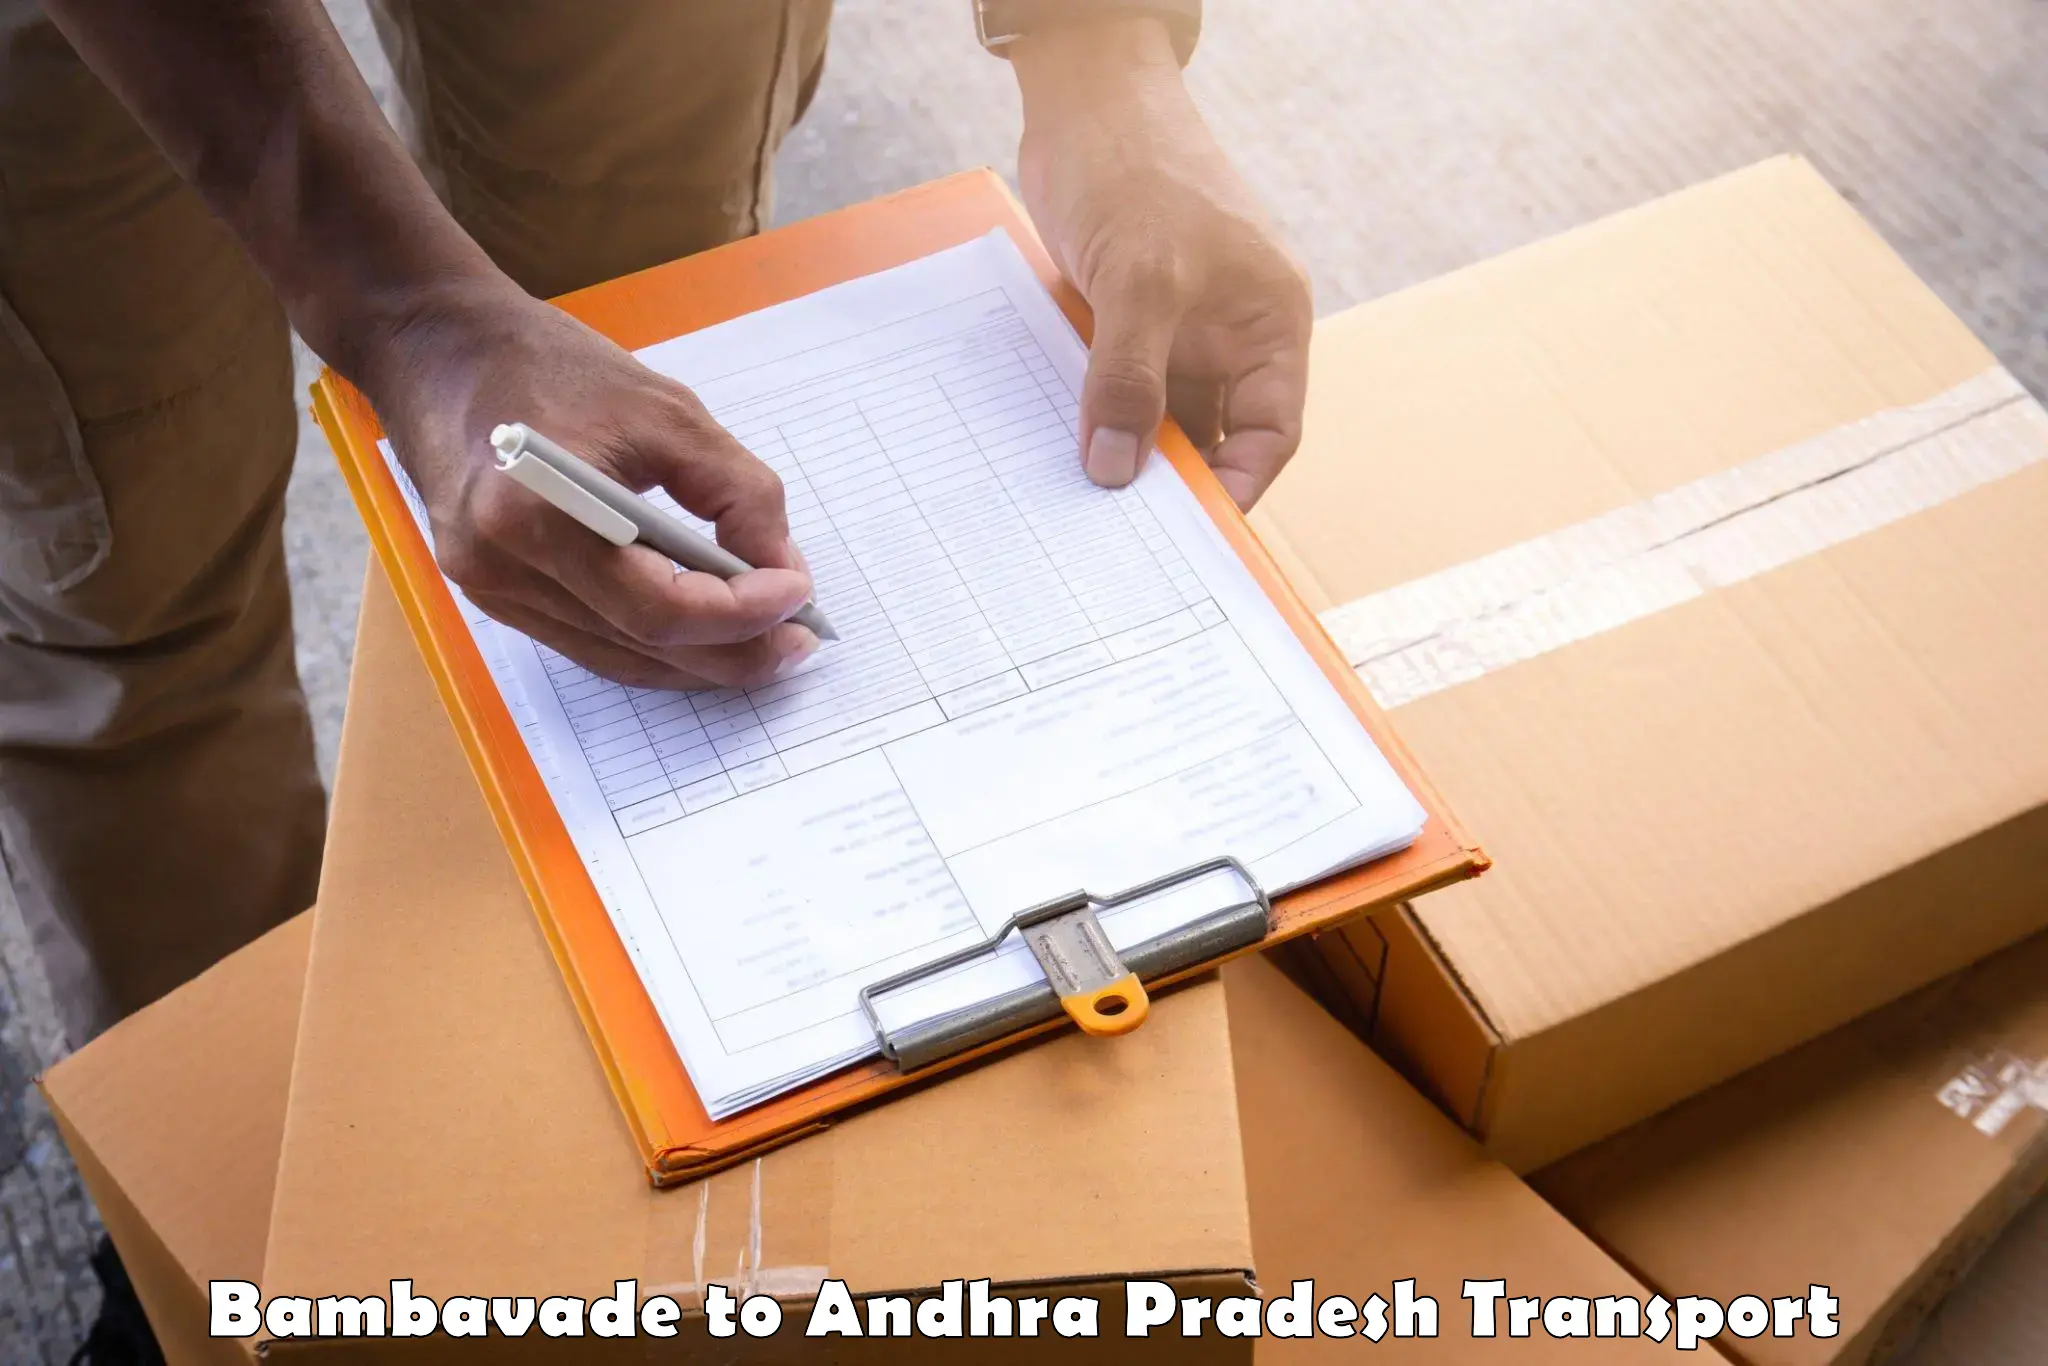 Daily parcel service transport Bambavade to Kakinada